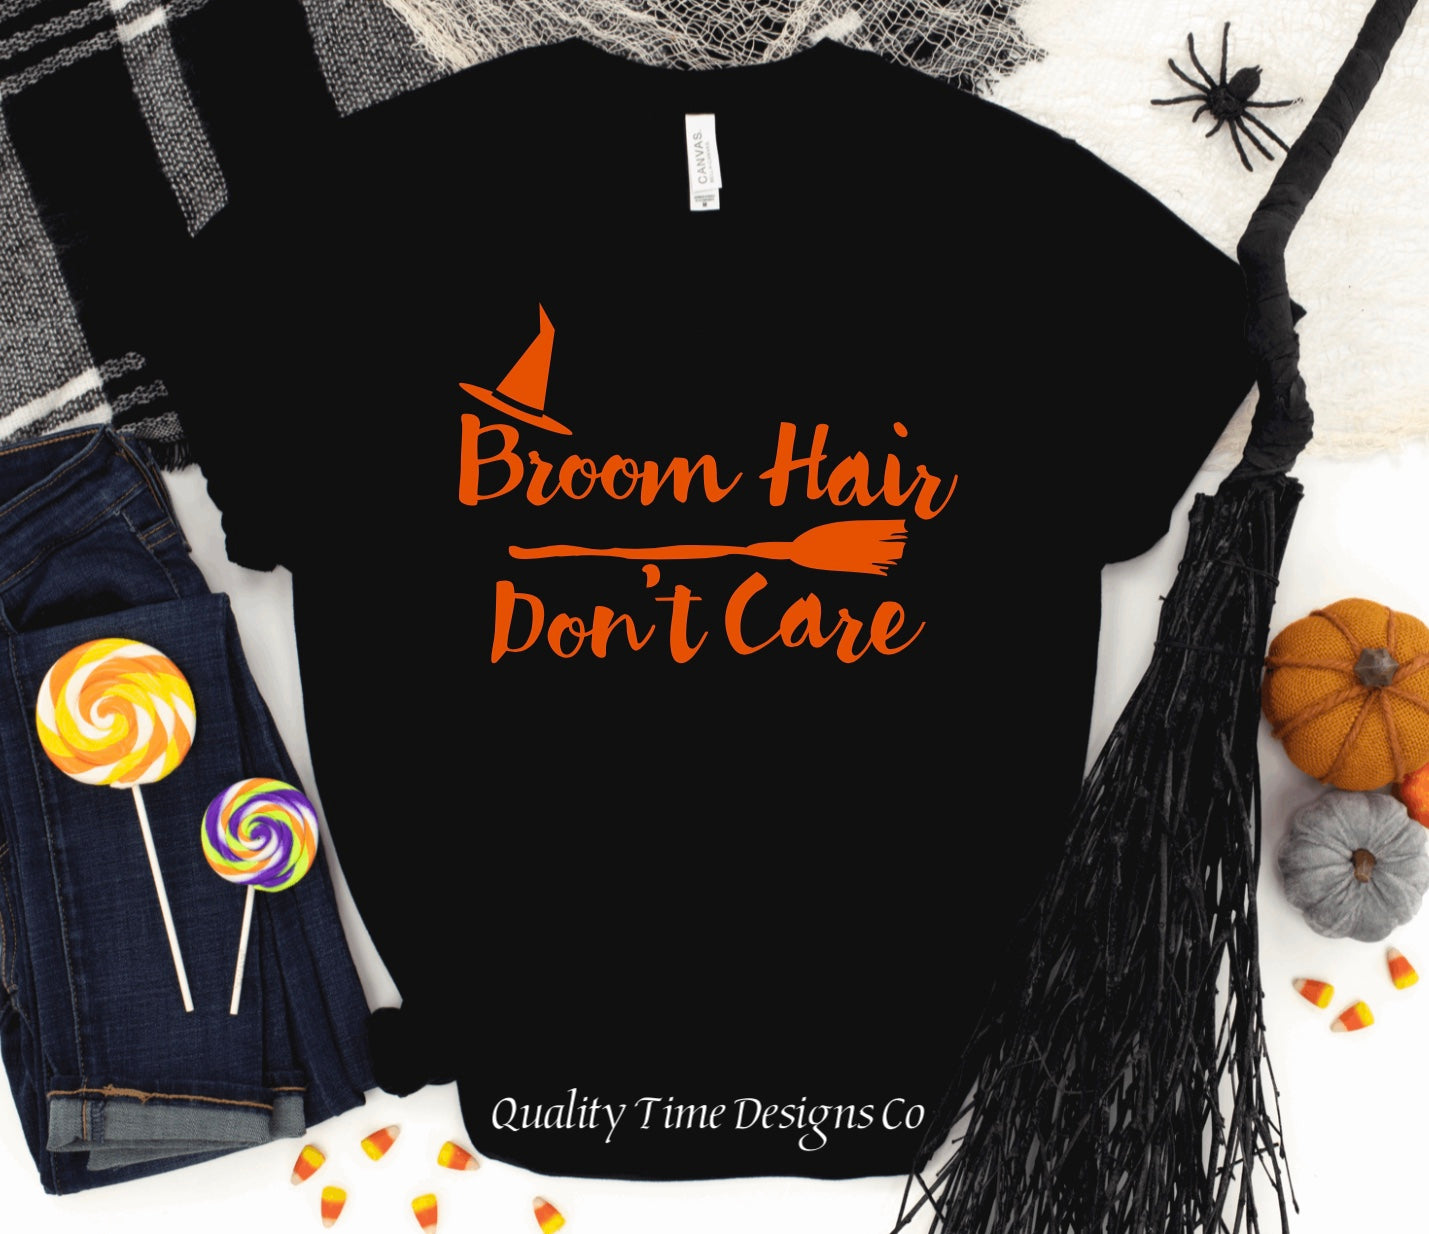 Broom hair don’t care t-shirt 